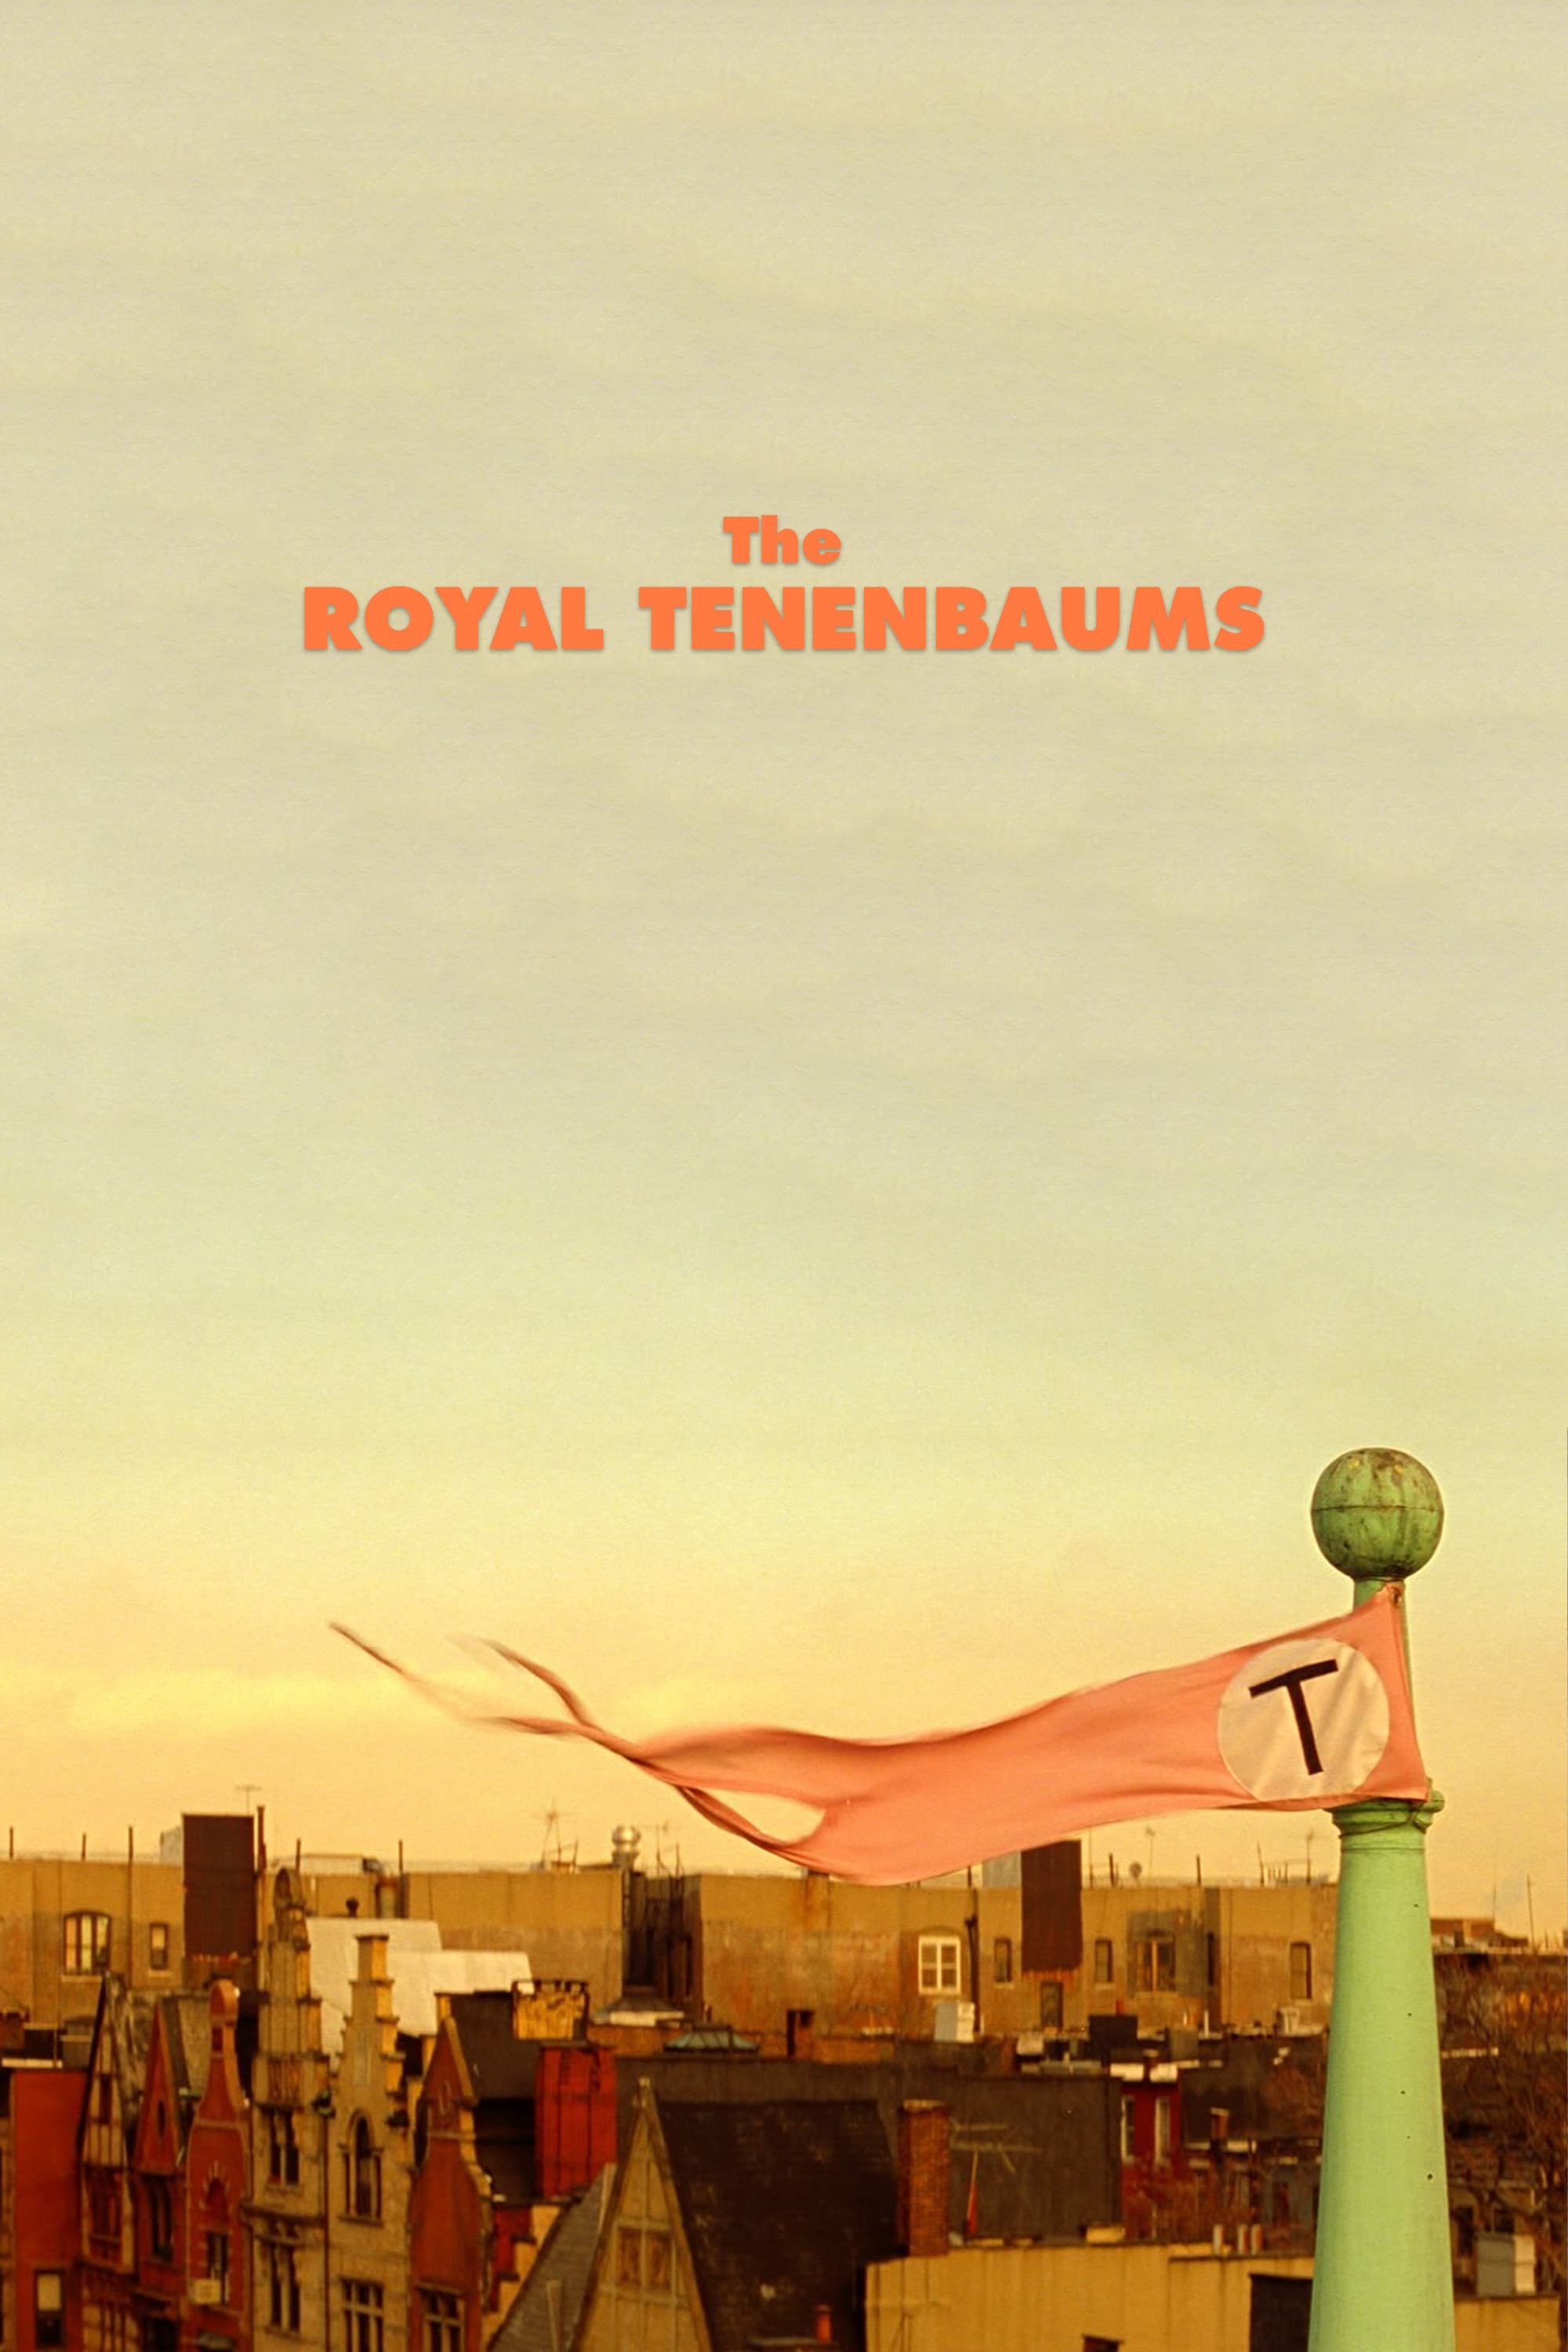 The Royal Tenenbaums Movie poster